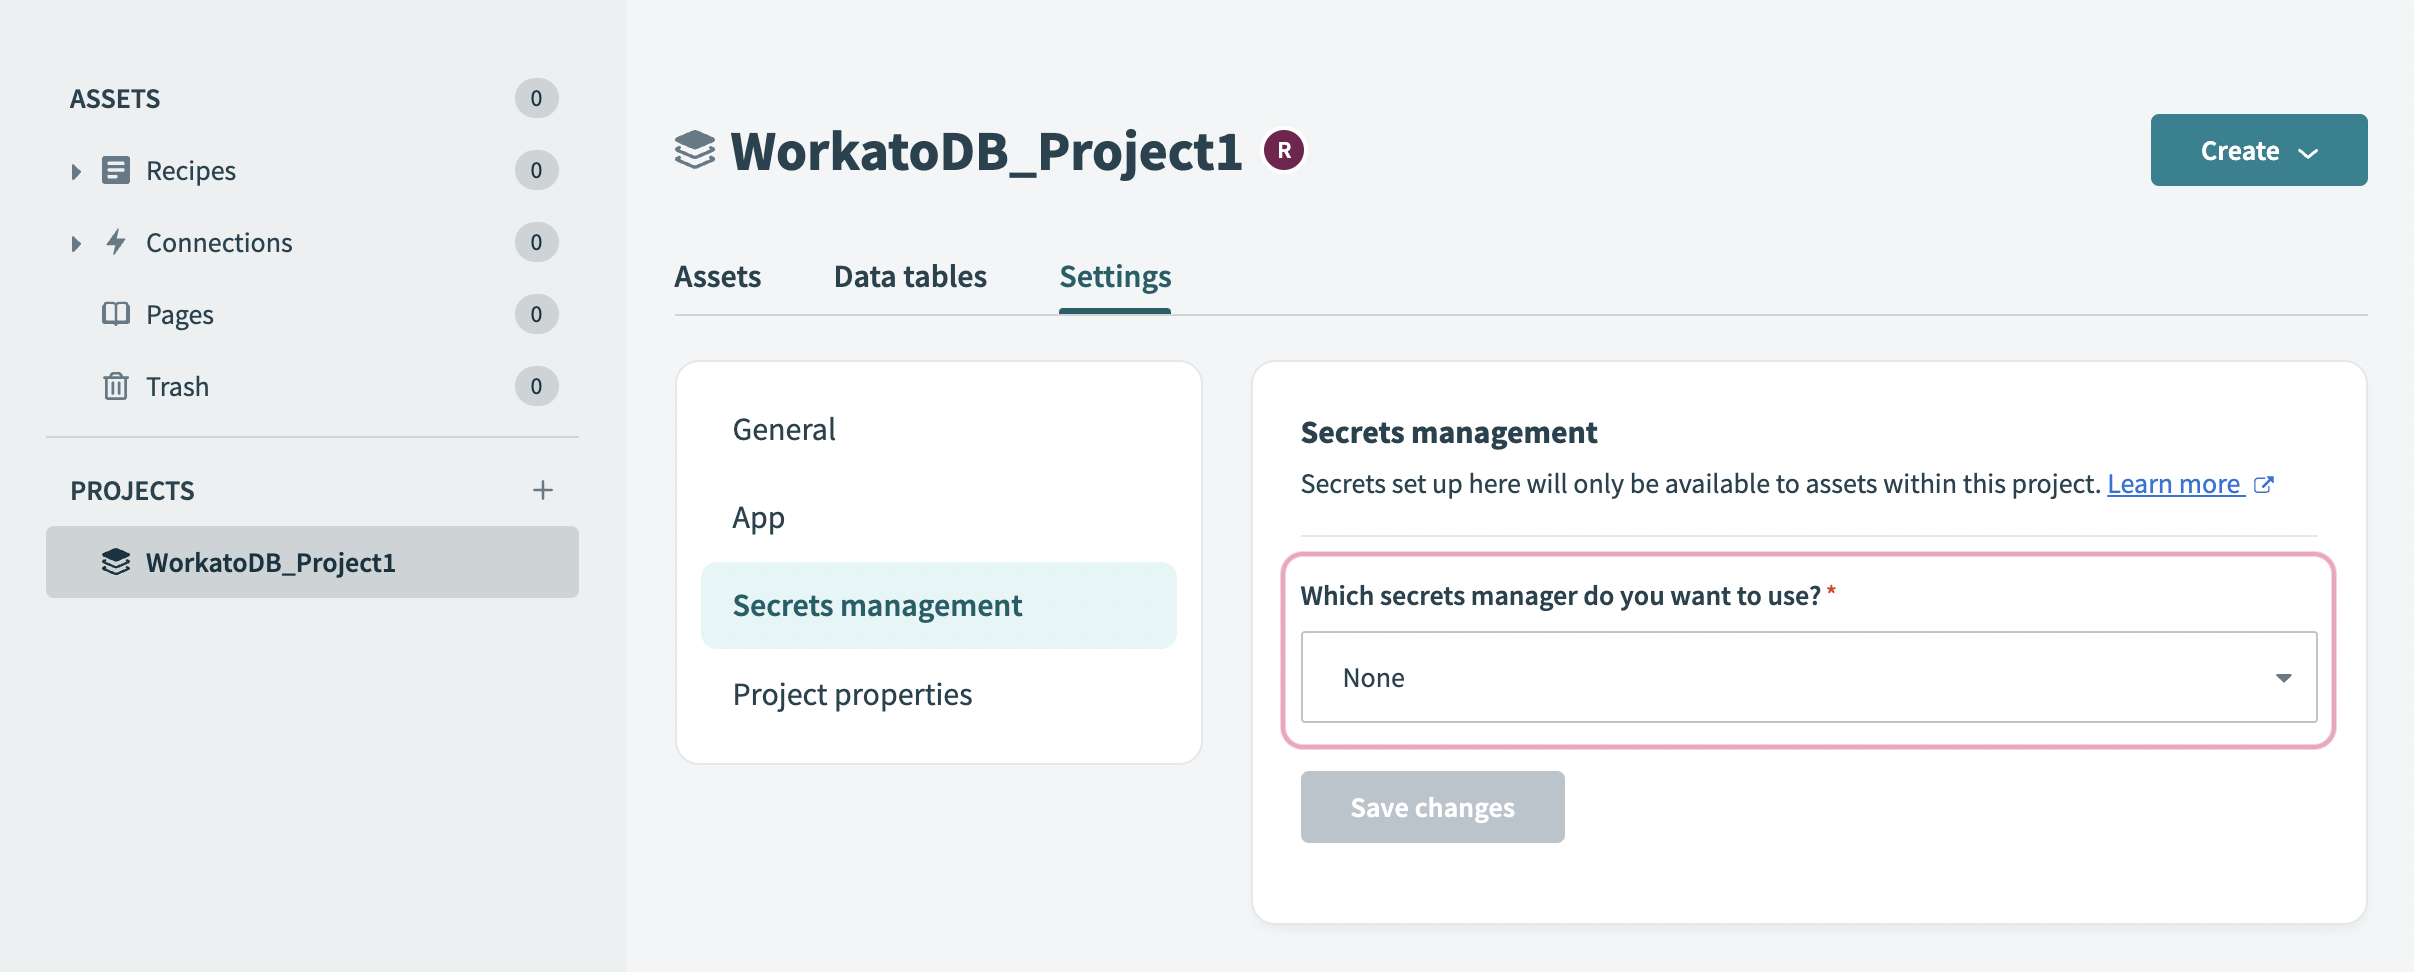 Secrets management interface of a project